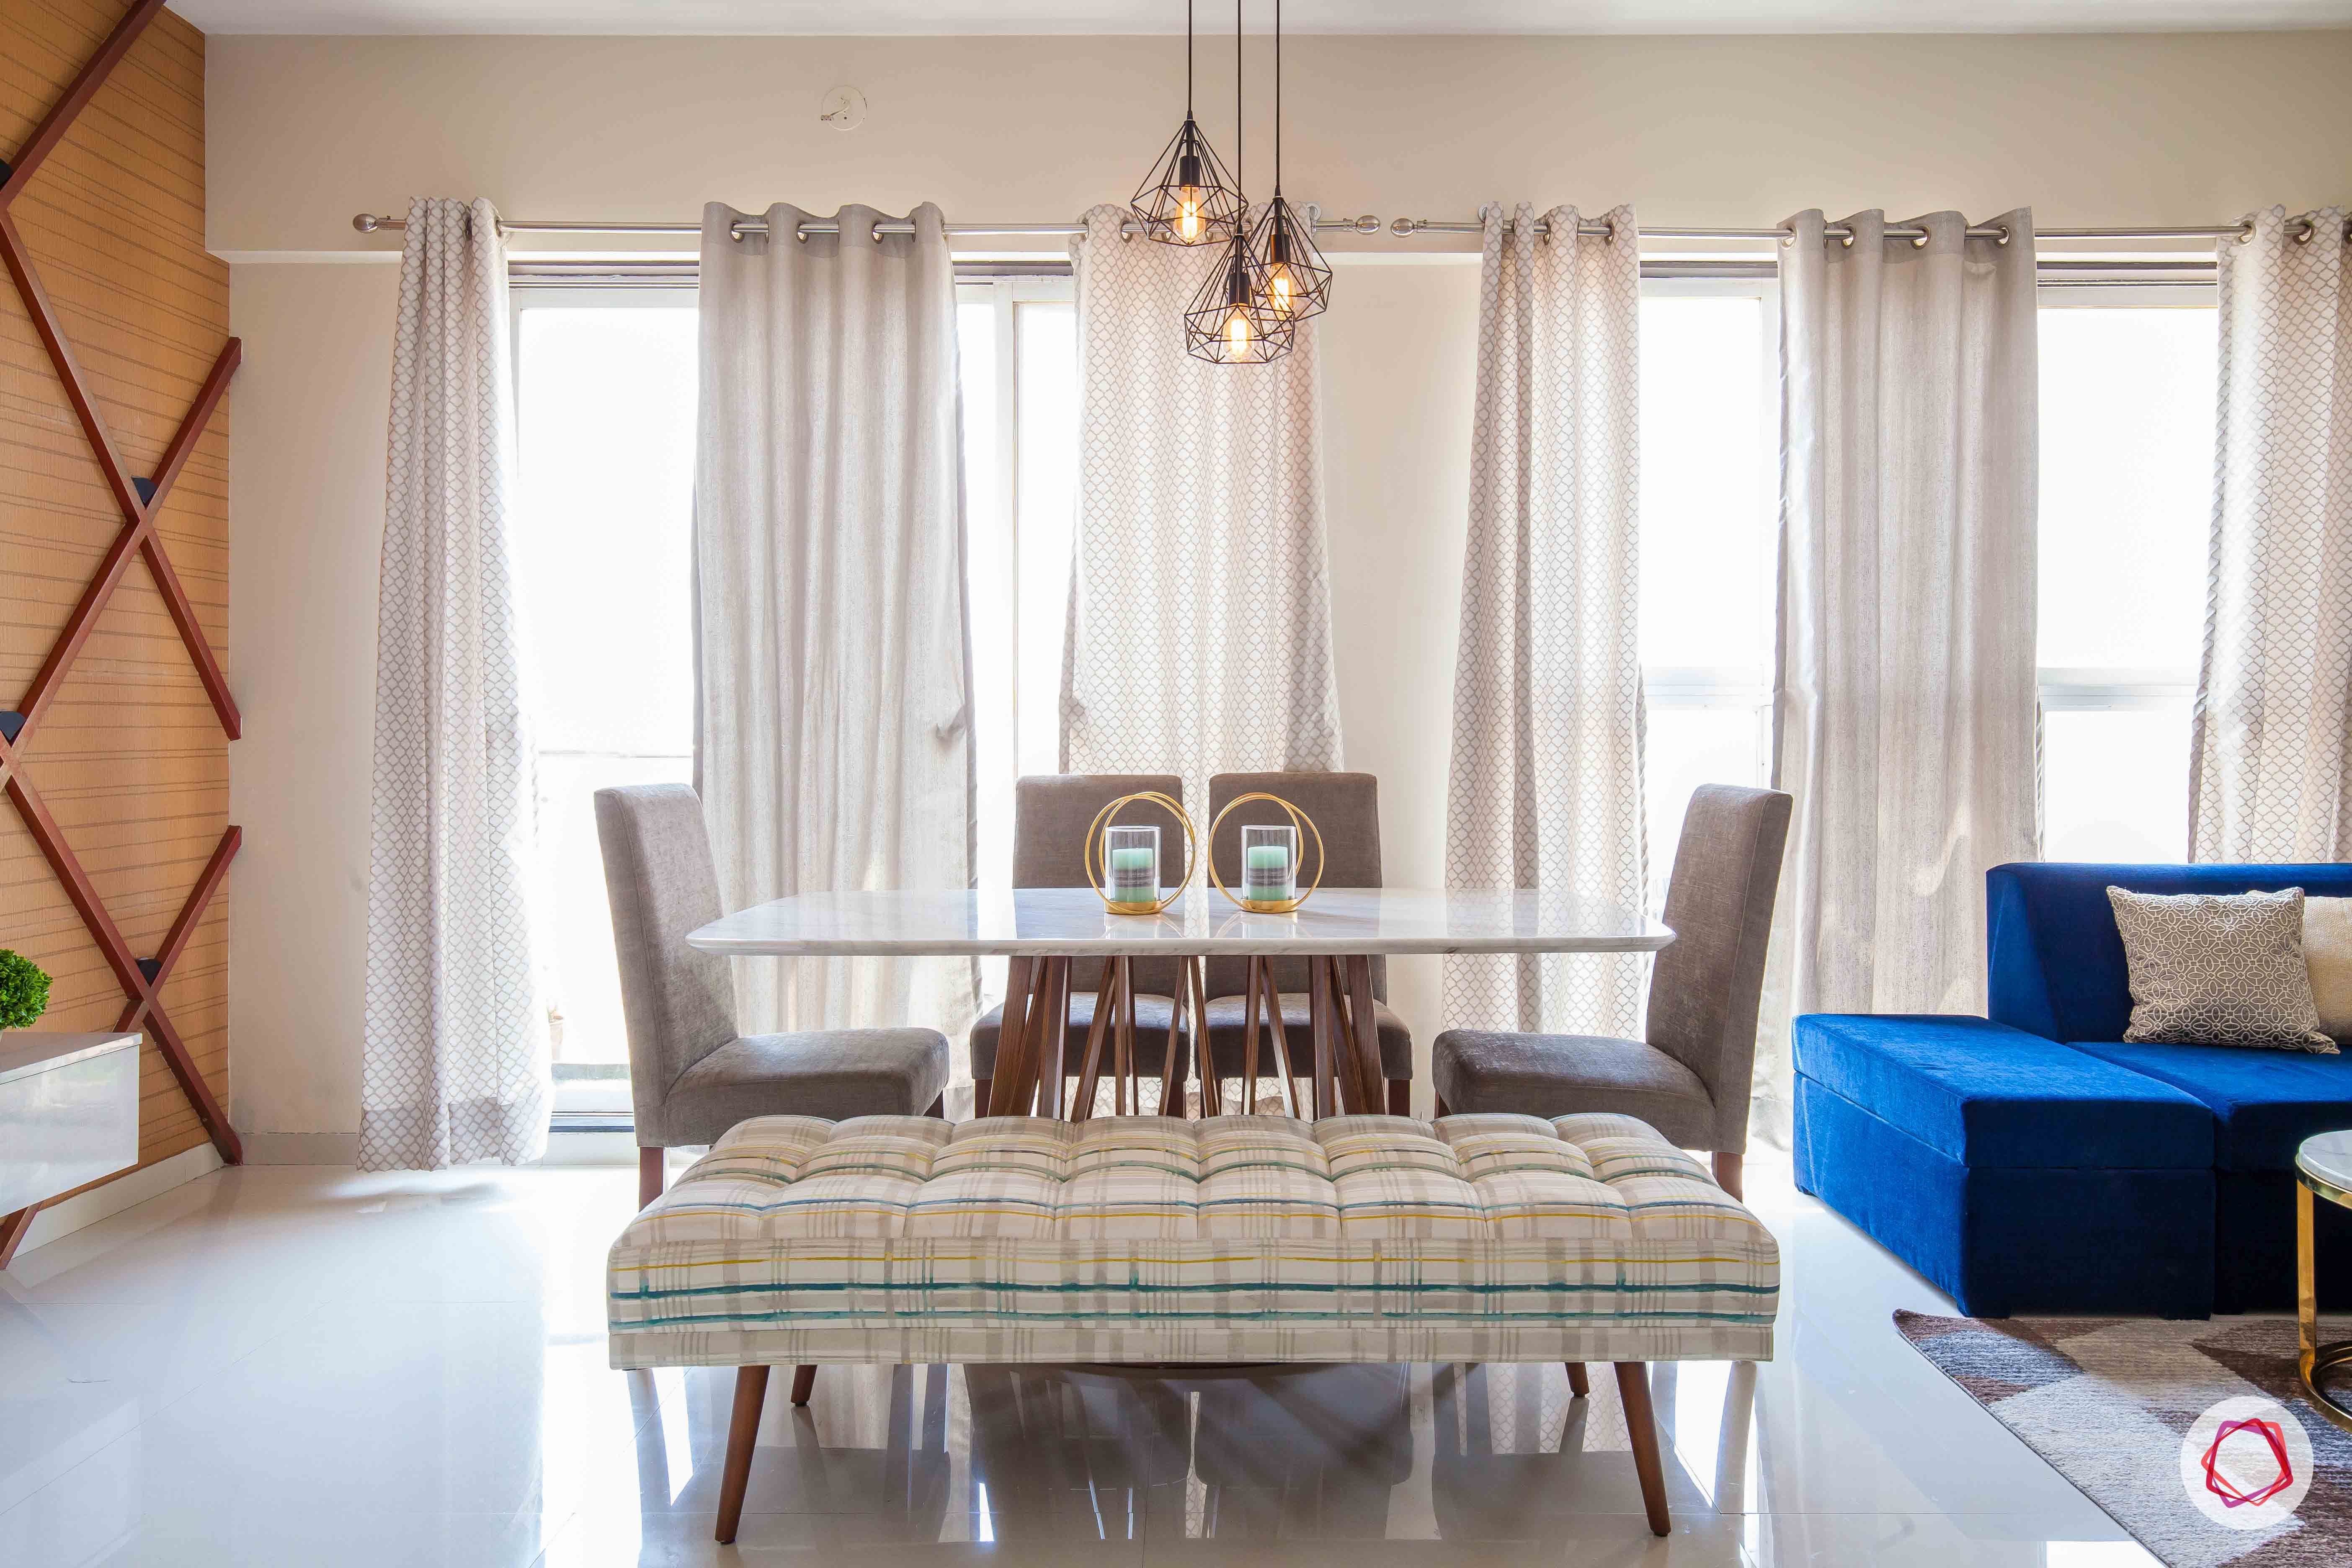 akshar elementa-dining room-white curtains-bench-upholstered chairs